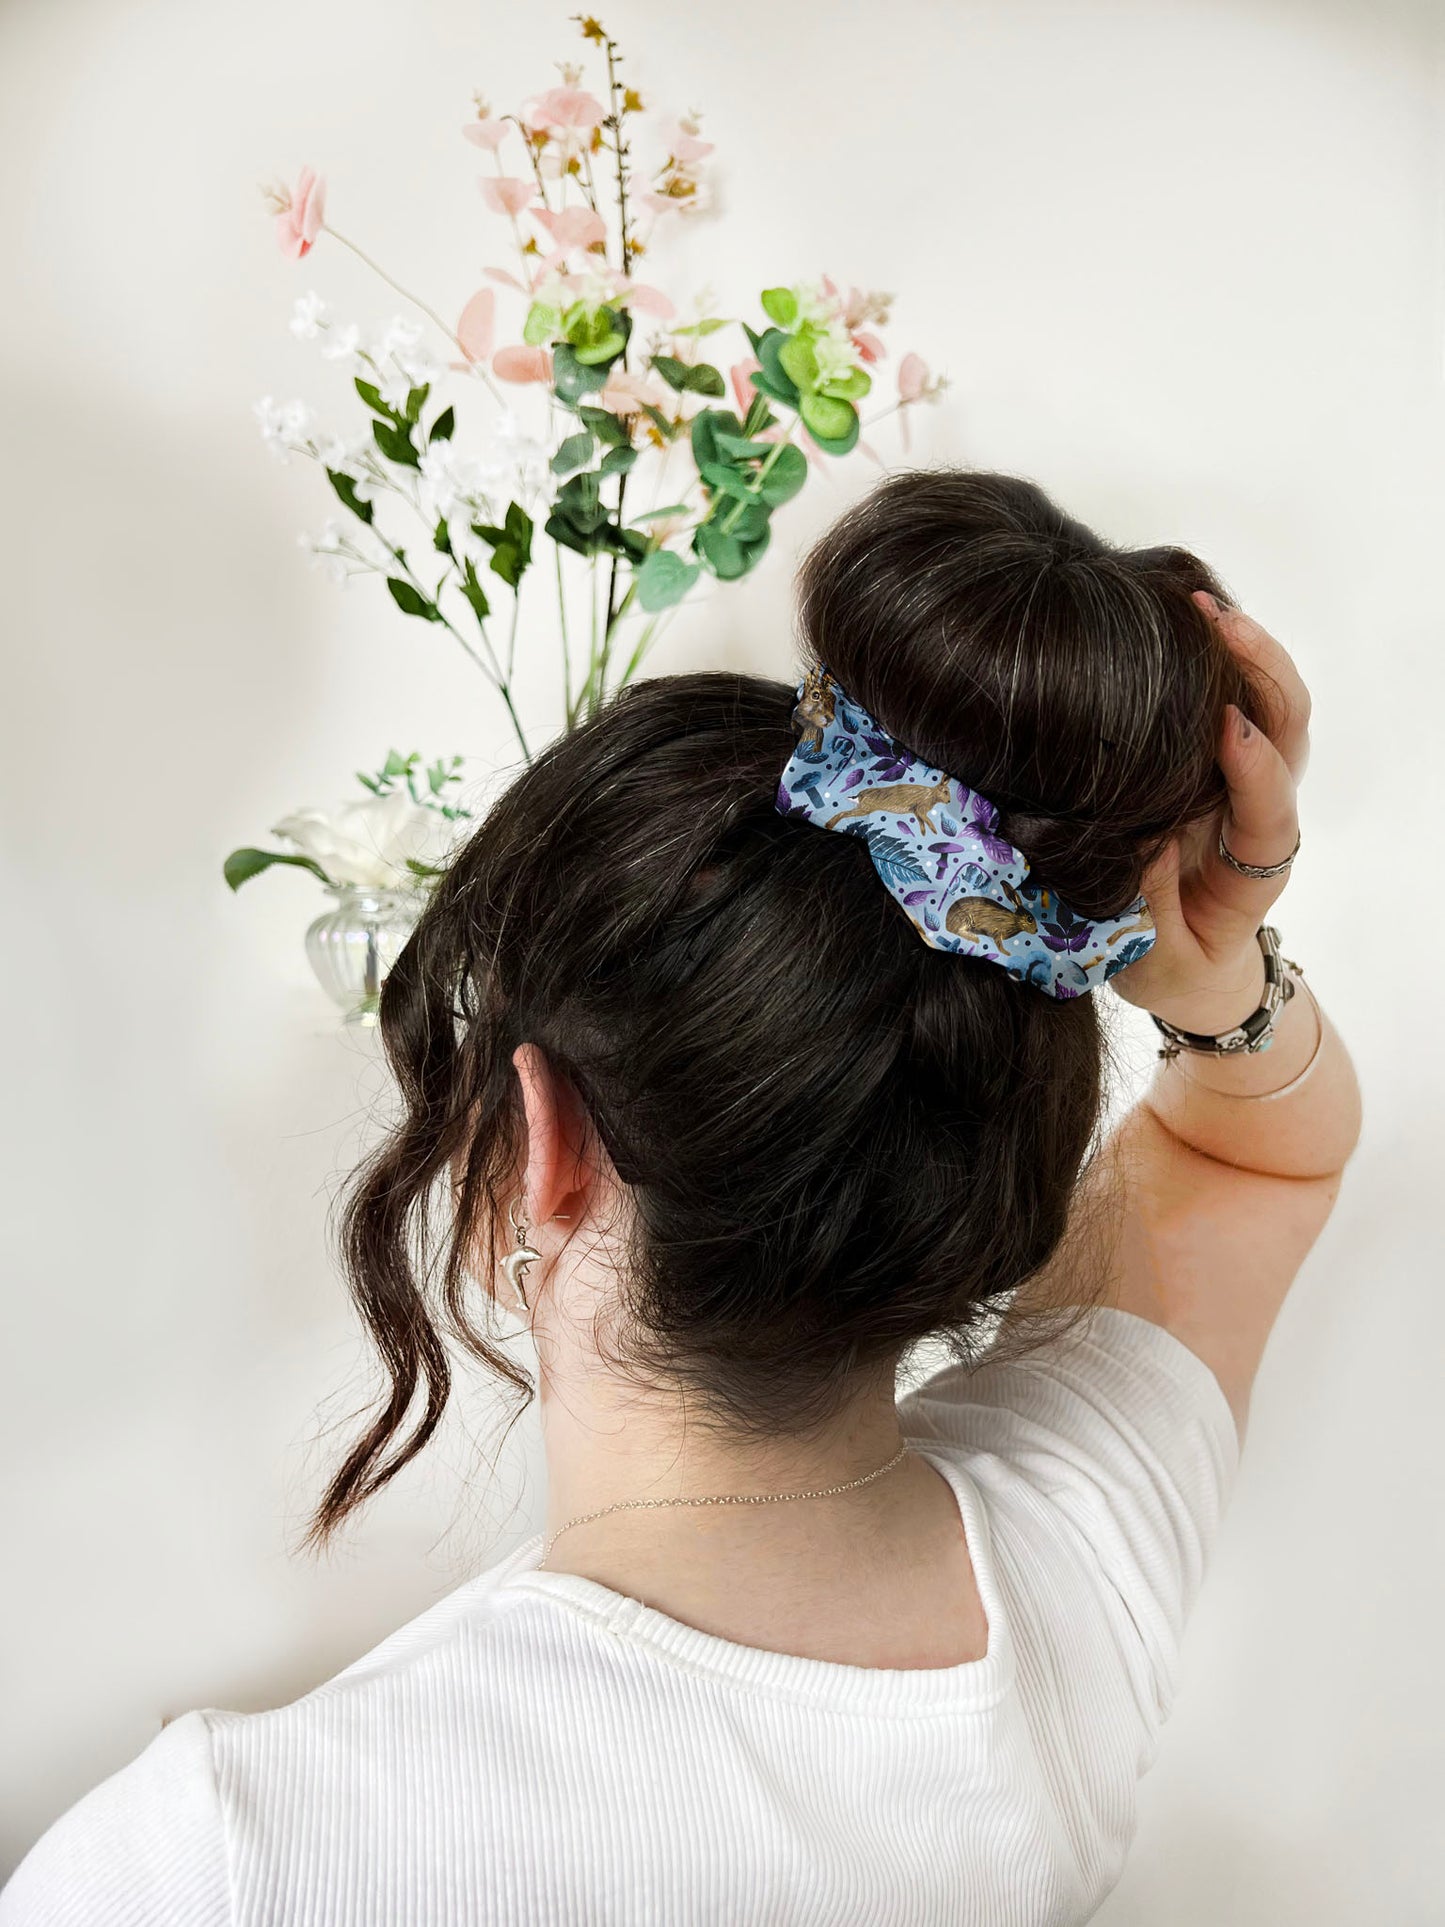 scrunchie with hare pattern on it around a bun on dark haired girl